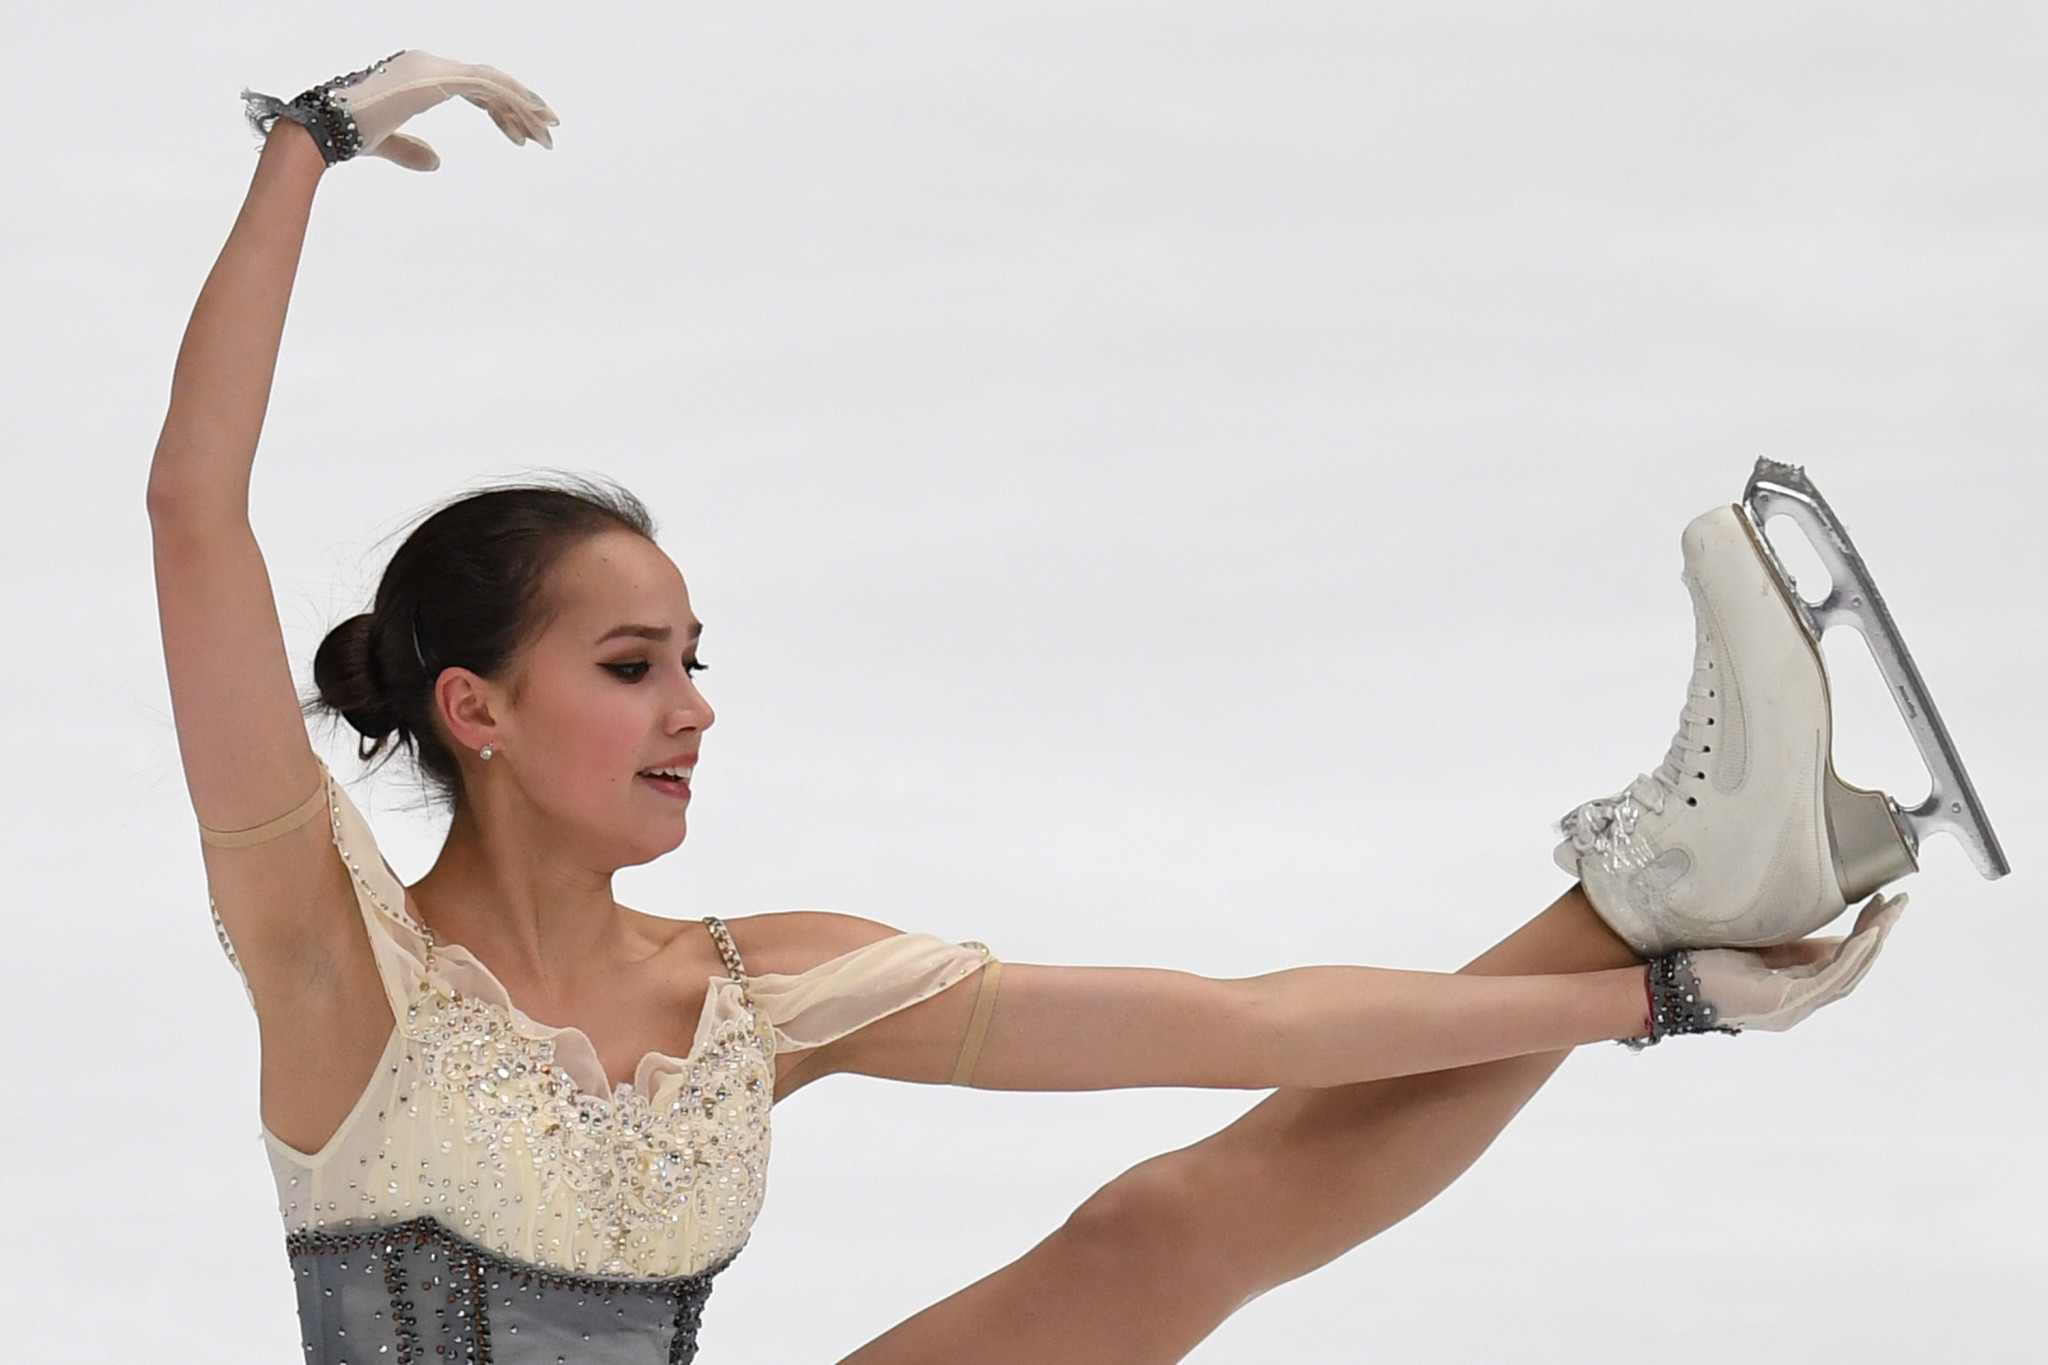 Russia's Alina Zagitova will aim to defend her ladies title ©Getty Images